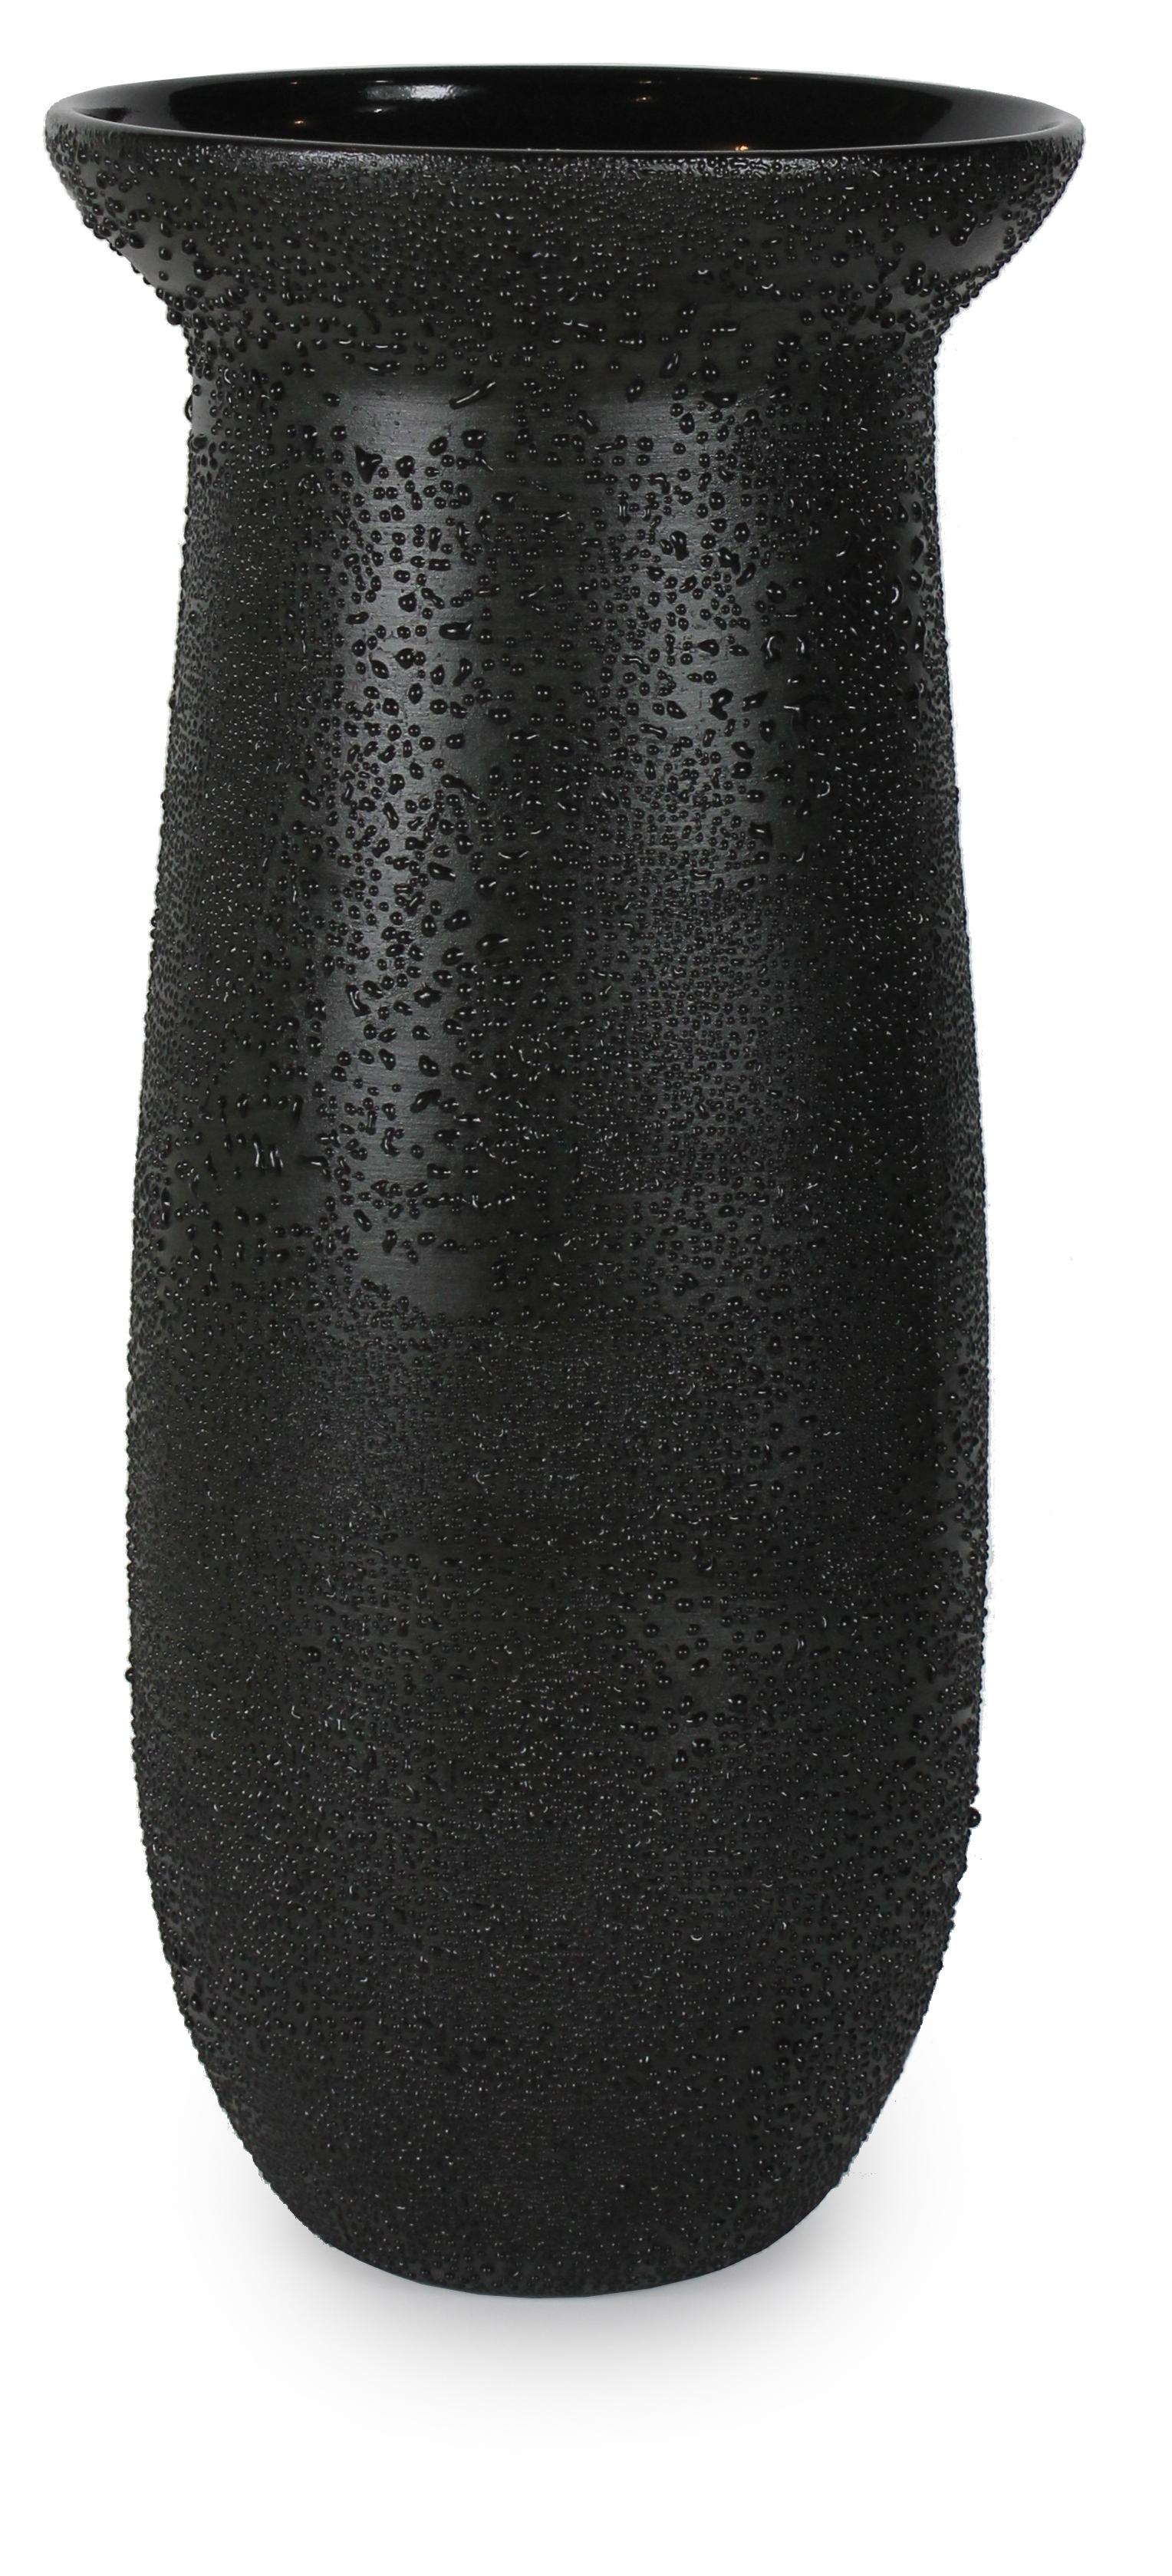 Modern Contemporary Tall Dew Vase #2 Striped Black Ceramic and Glaze, Handmade For Sale